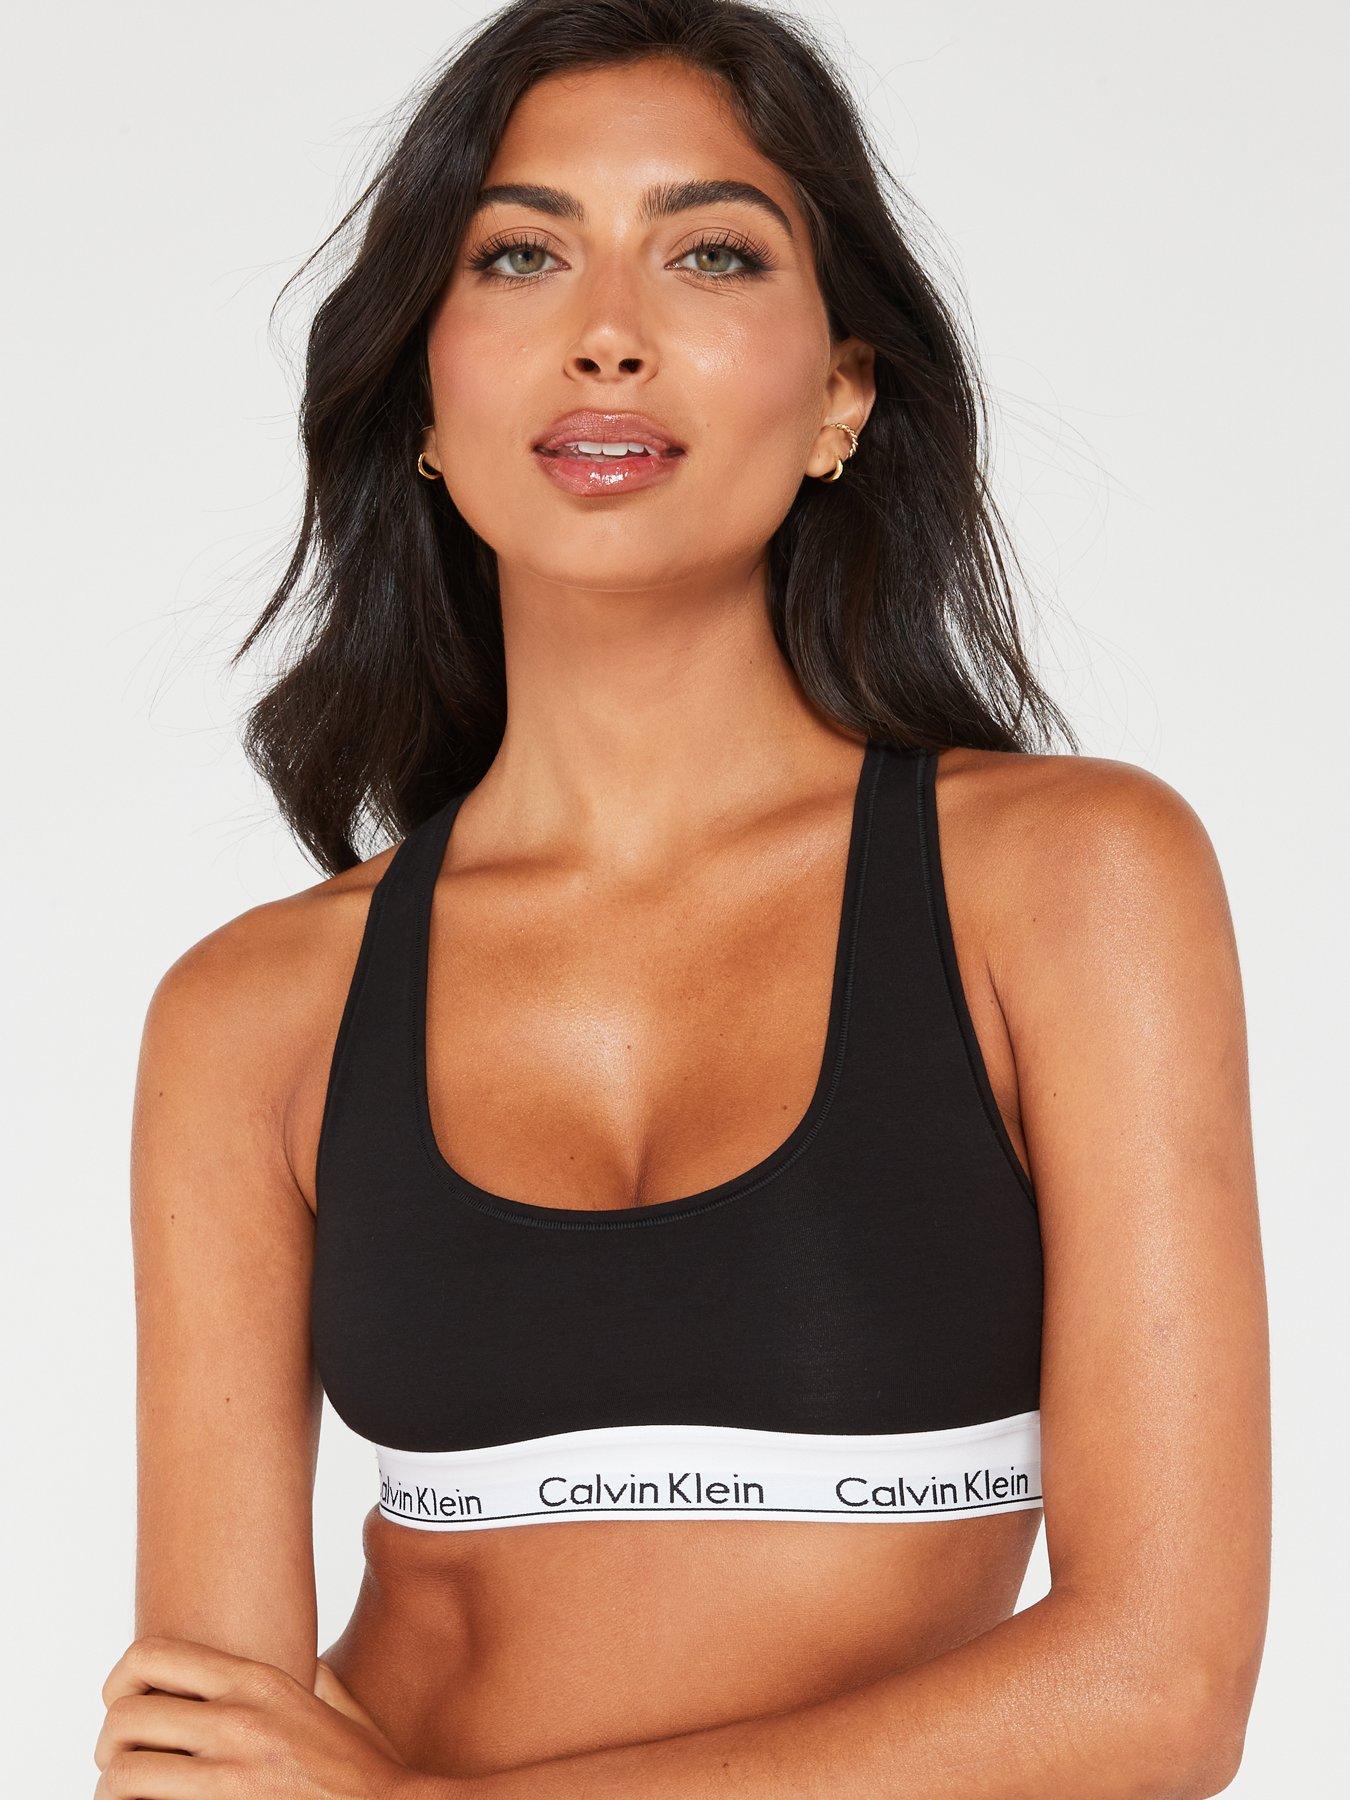 Calvin Klein Bras Size 34C, Women's Bralets & Bra Tops